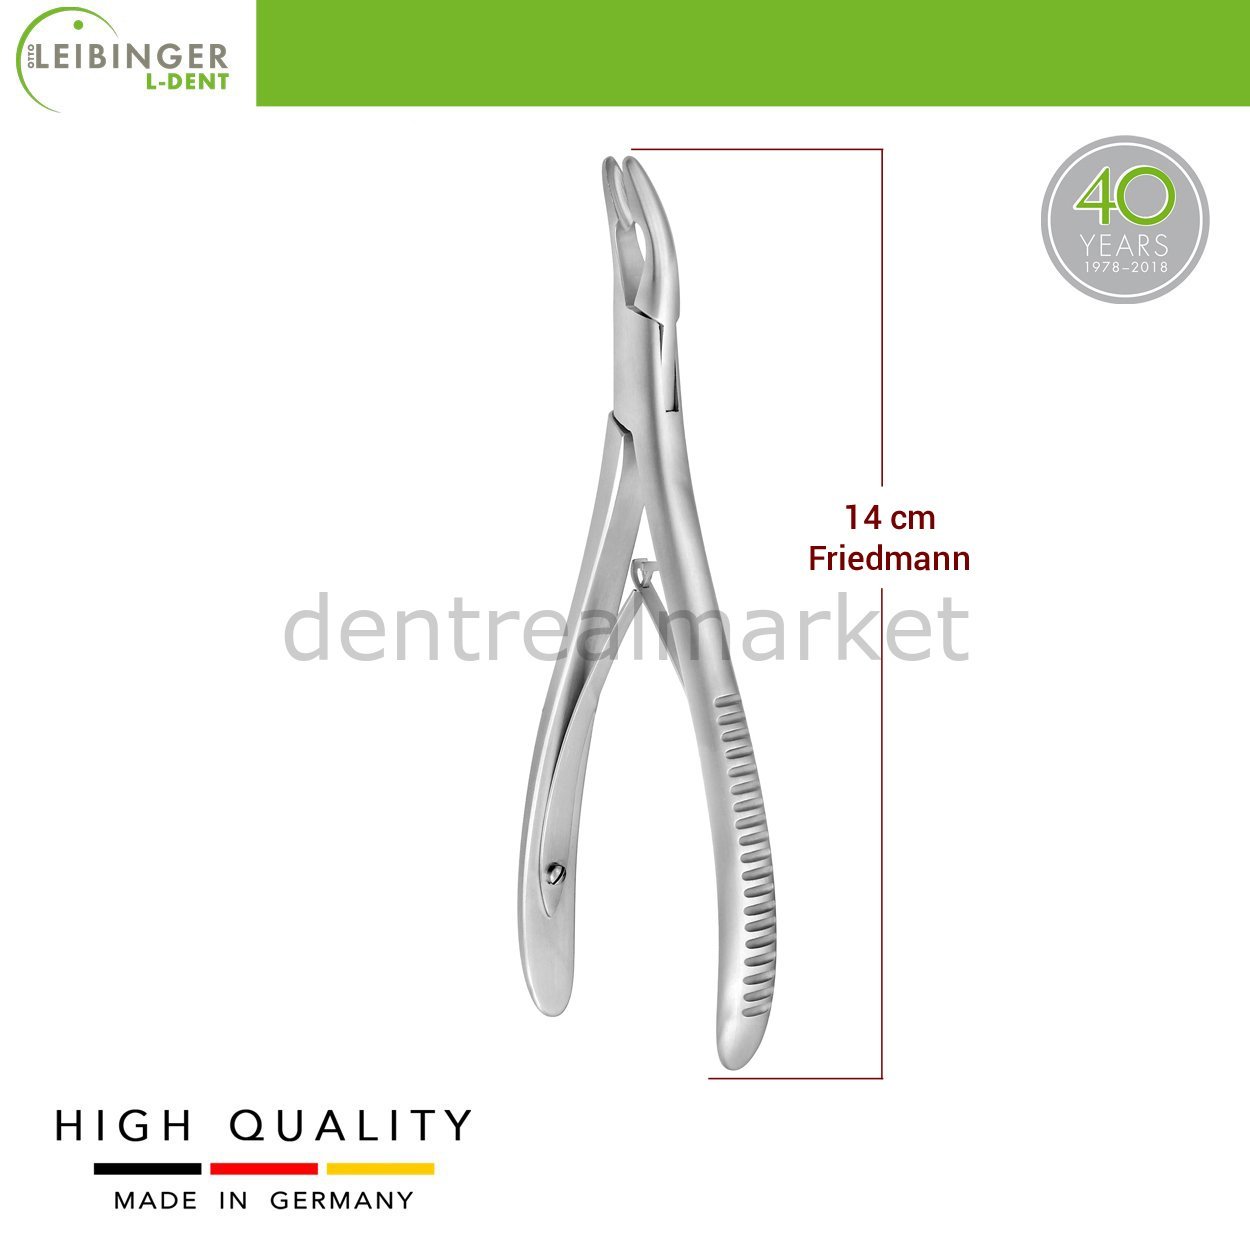 Friedmann Bone Rongeur - Dental Bone Rongeur 14cm